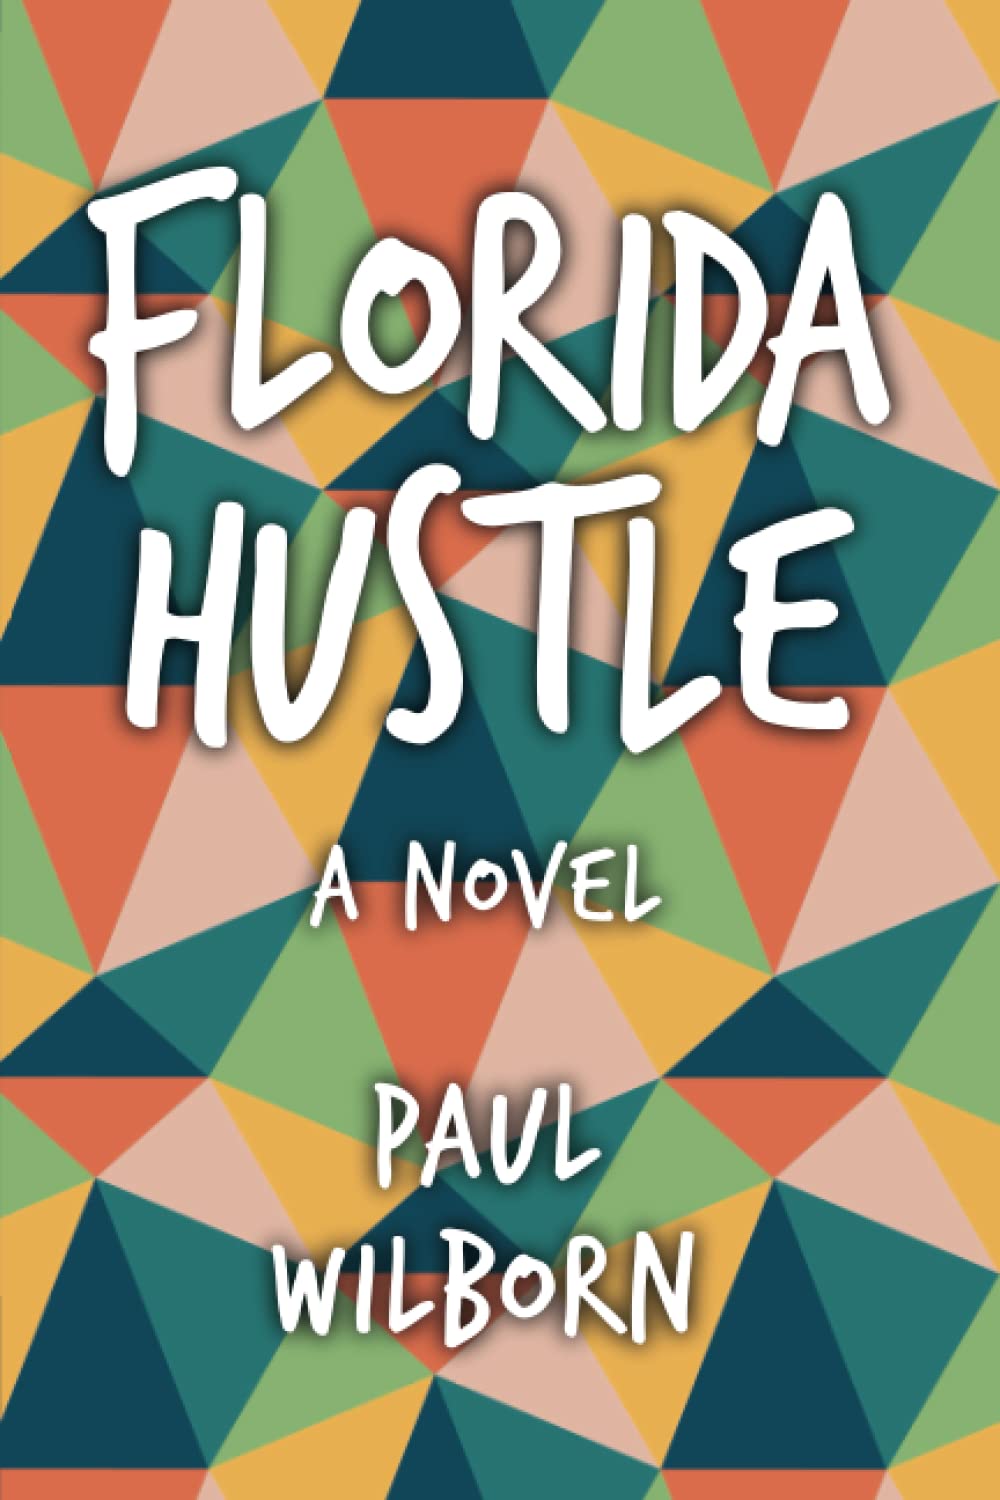 Florida Hustle SureShot Books